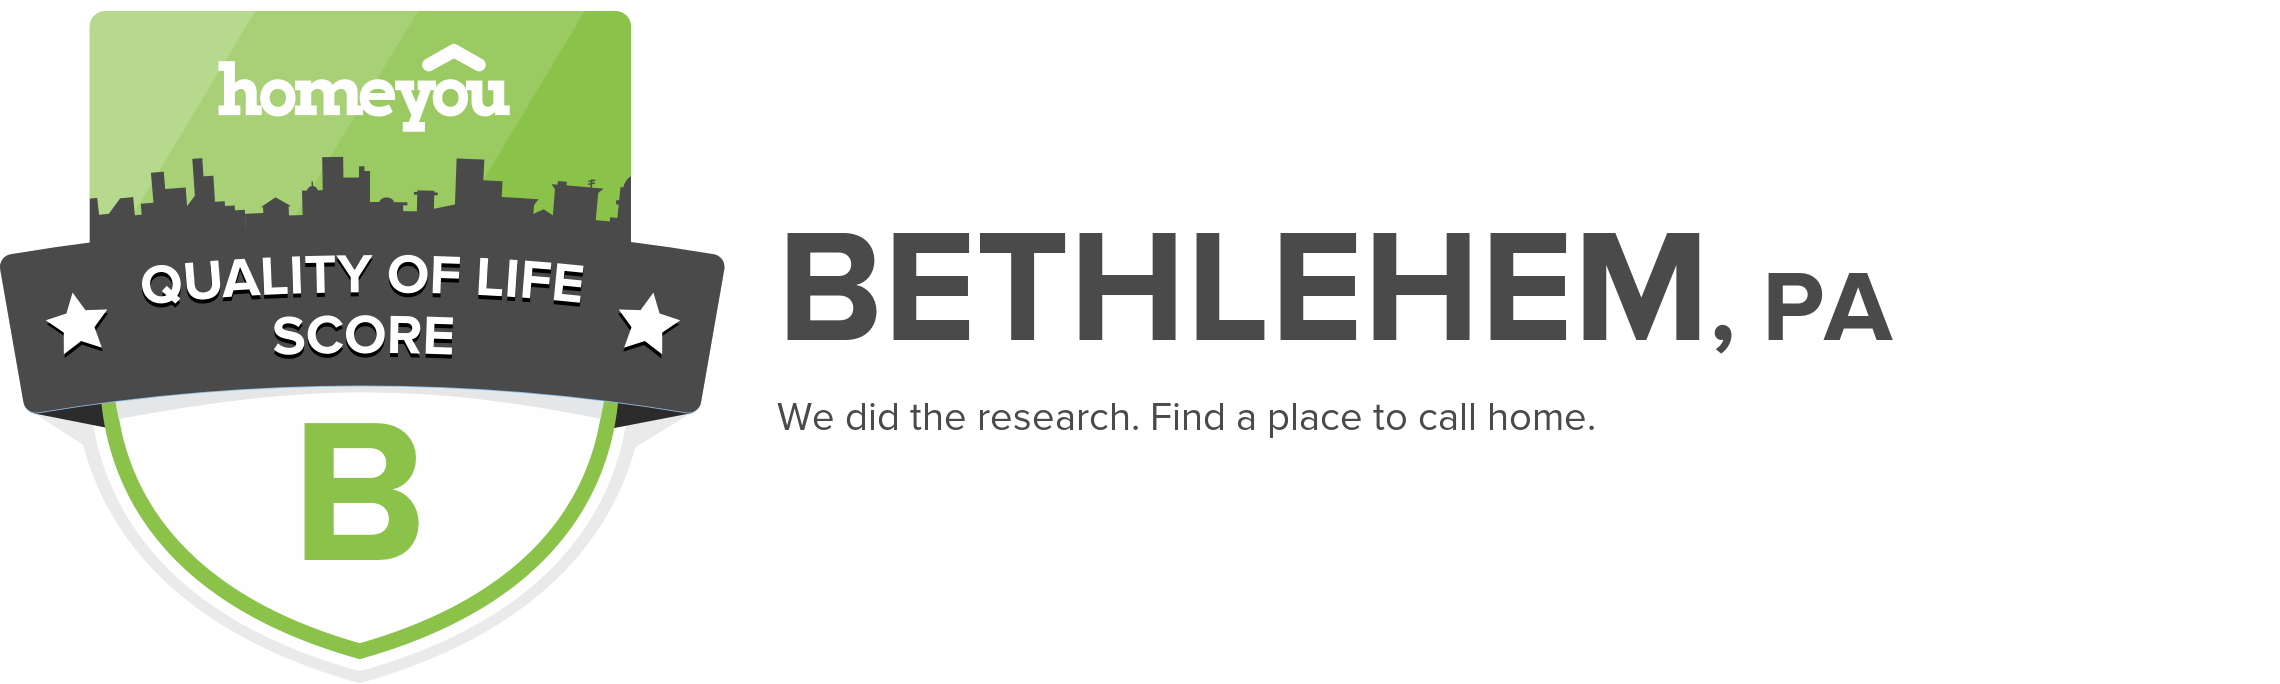 Bethlehem, PA